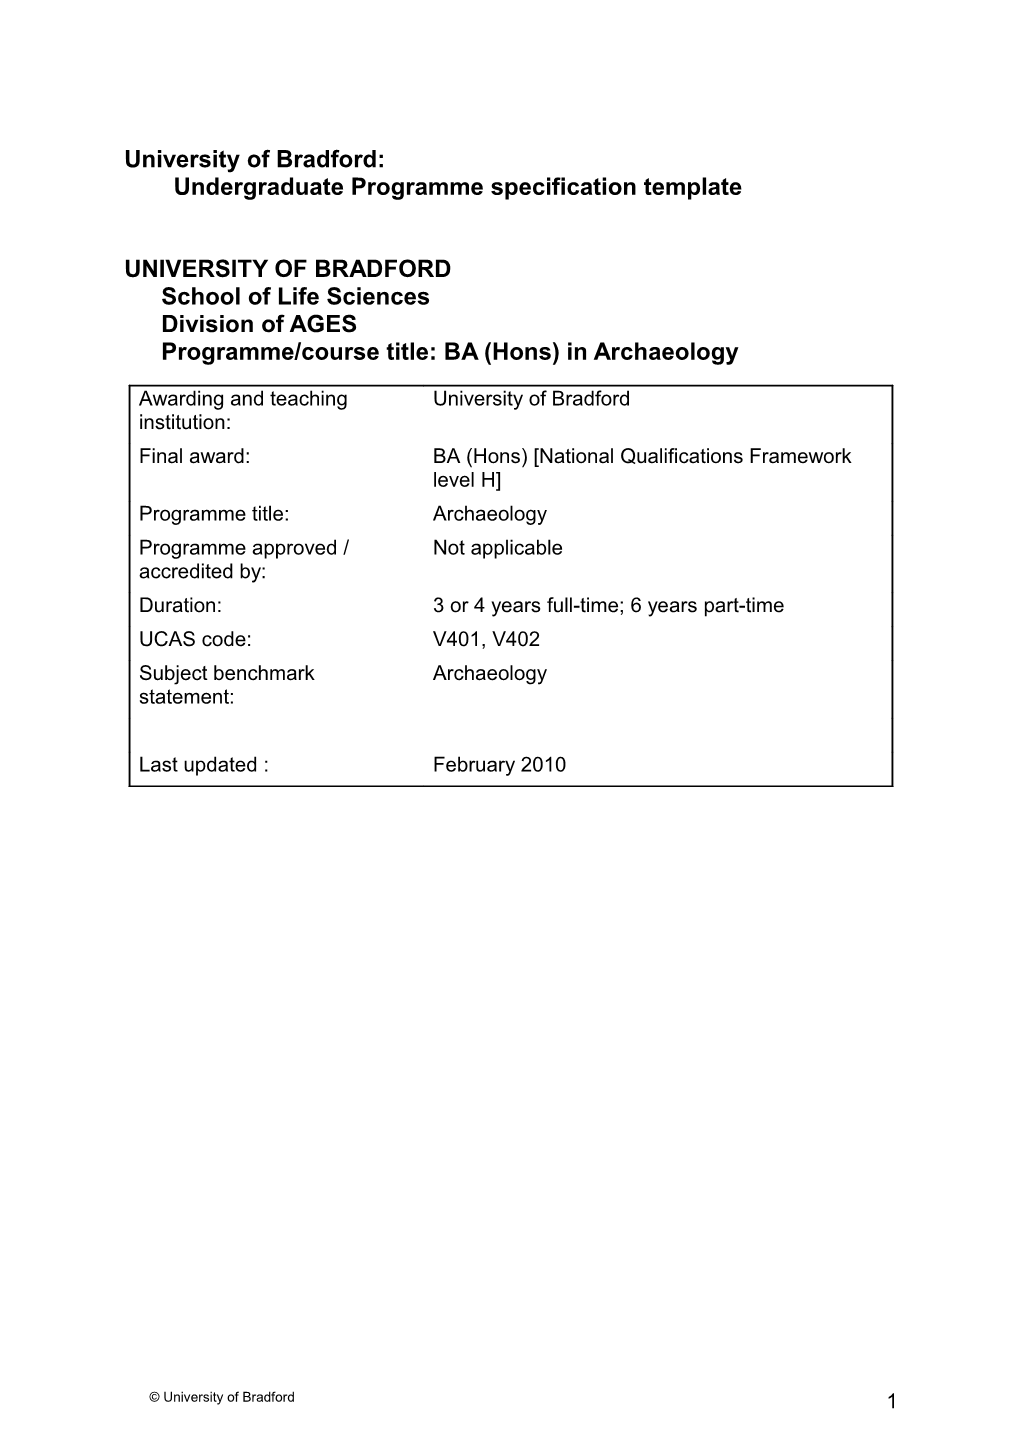 University of Bradford: Undergraduate Programme Specification Template